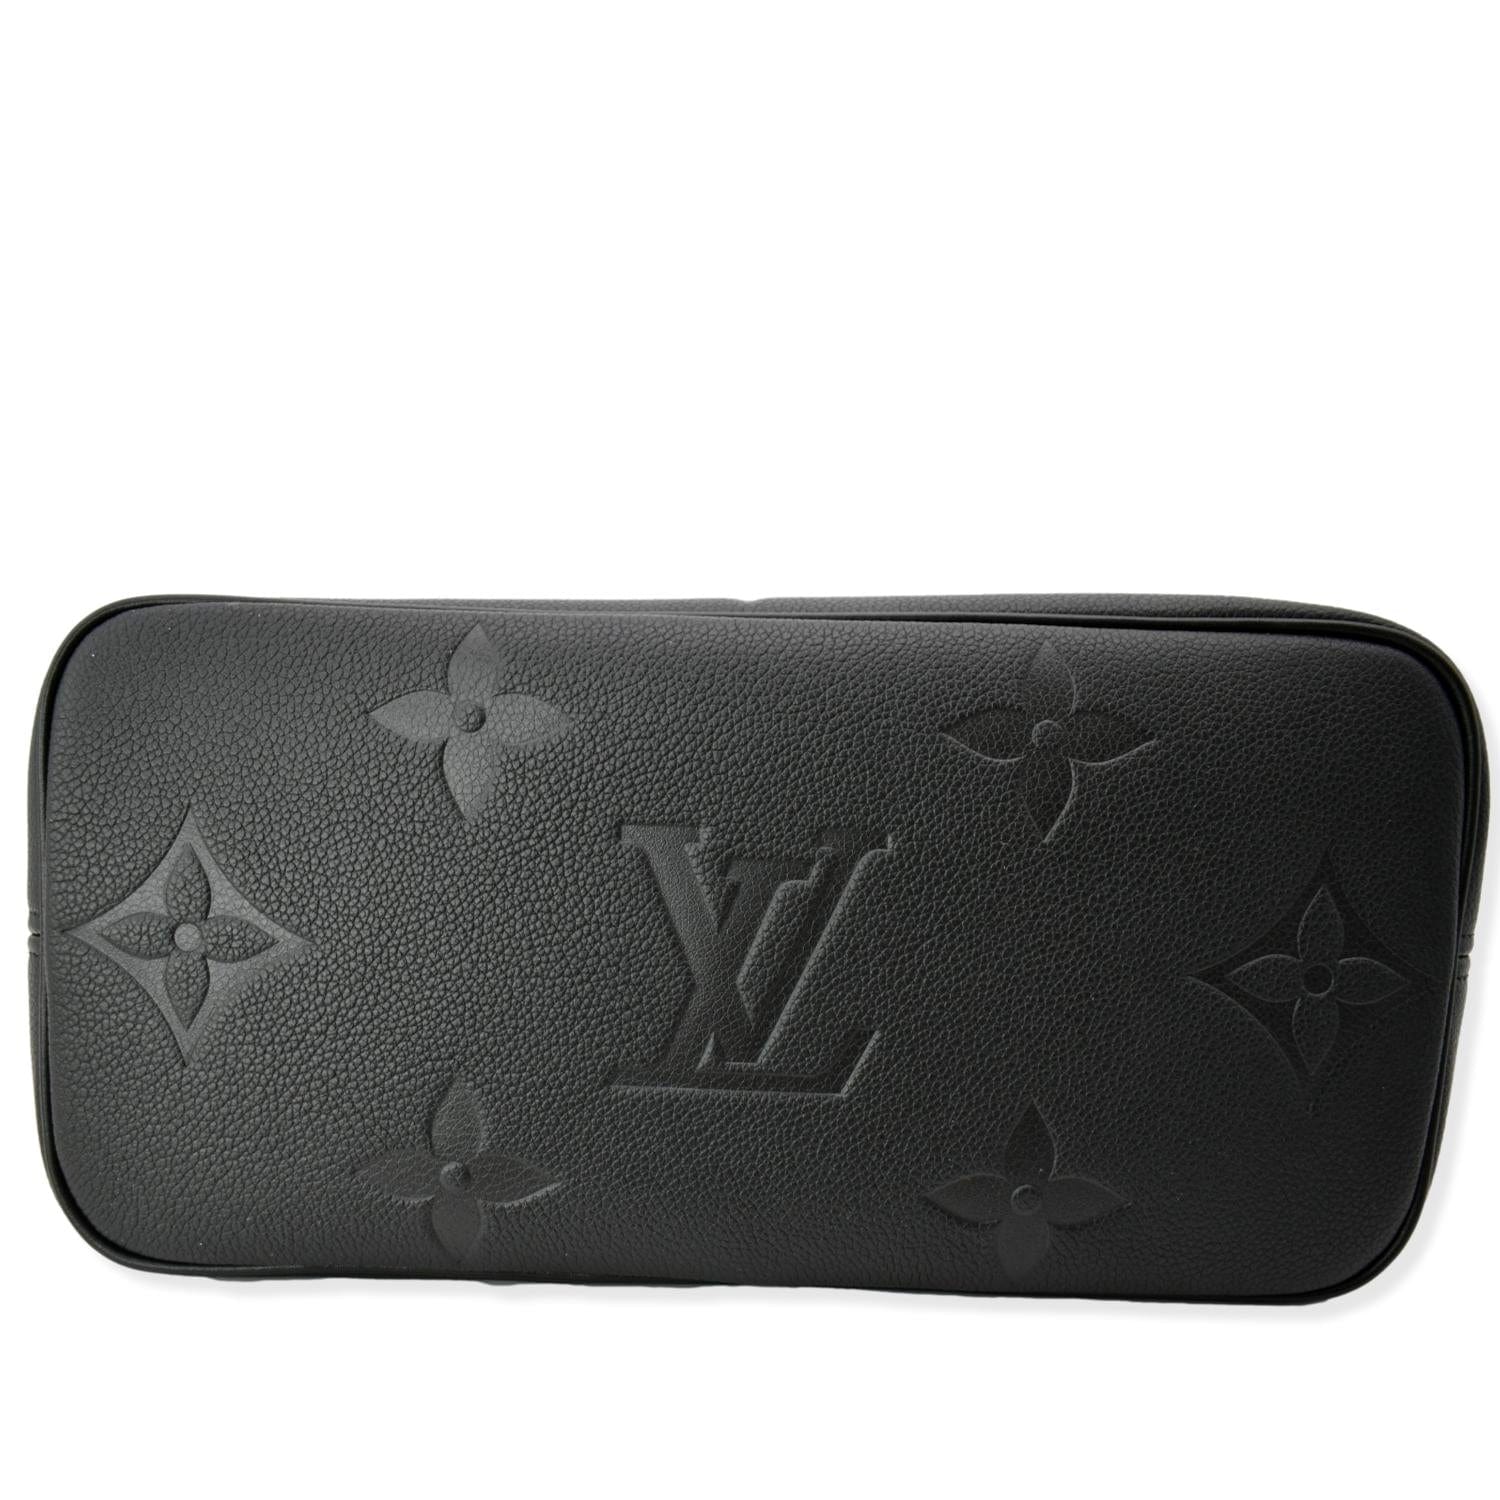 Louis Vuitton Black Monogram Wild at Heart Neverfull MM Tote Bag